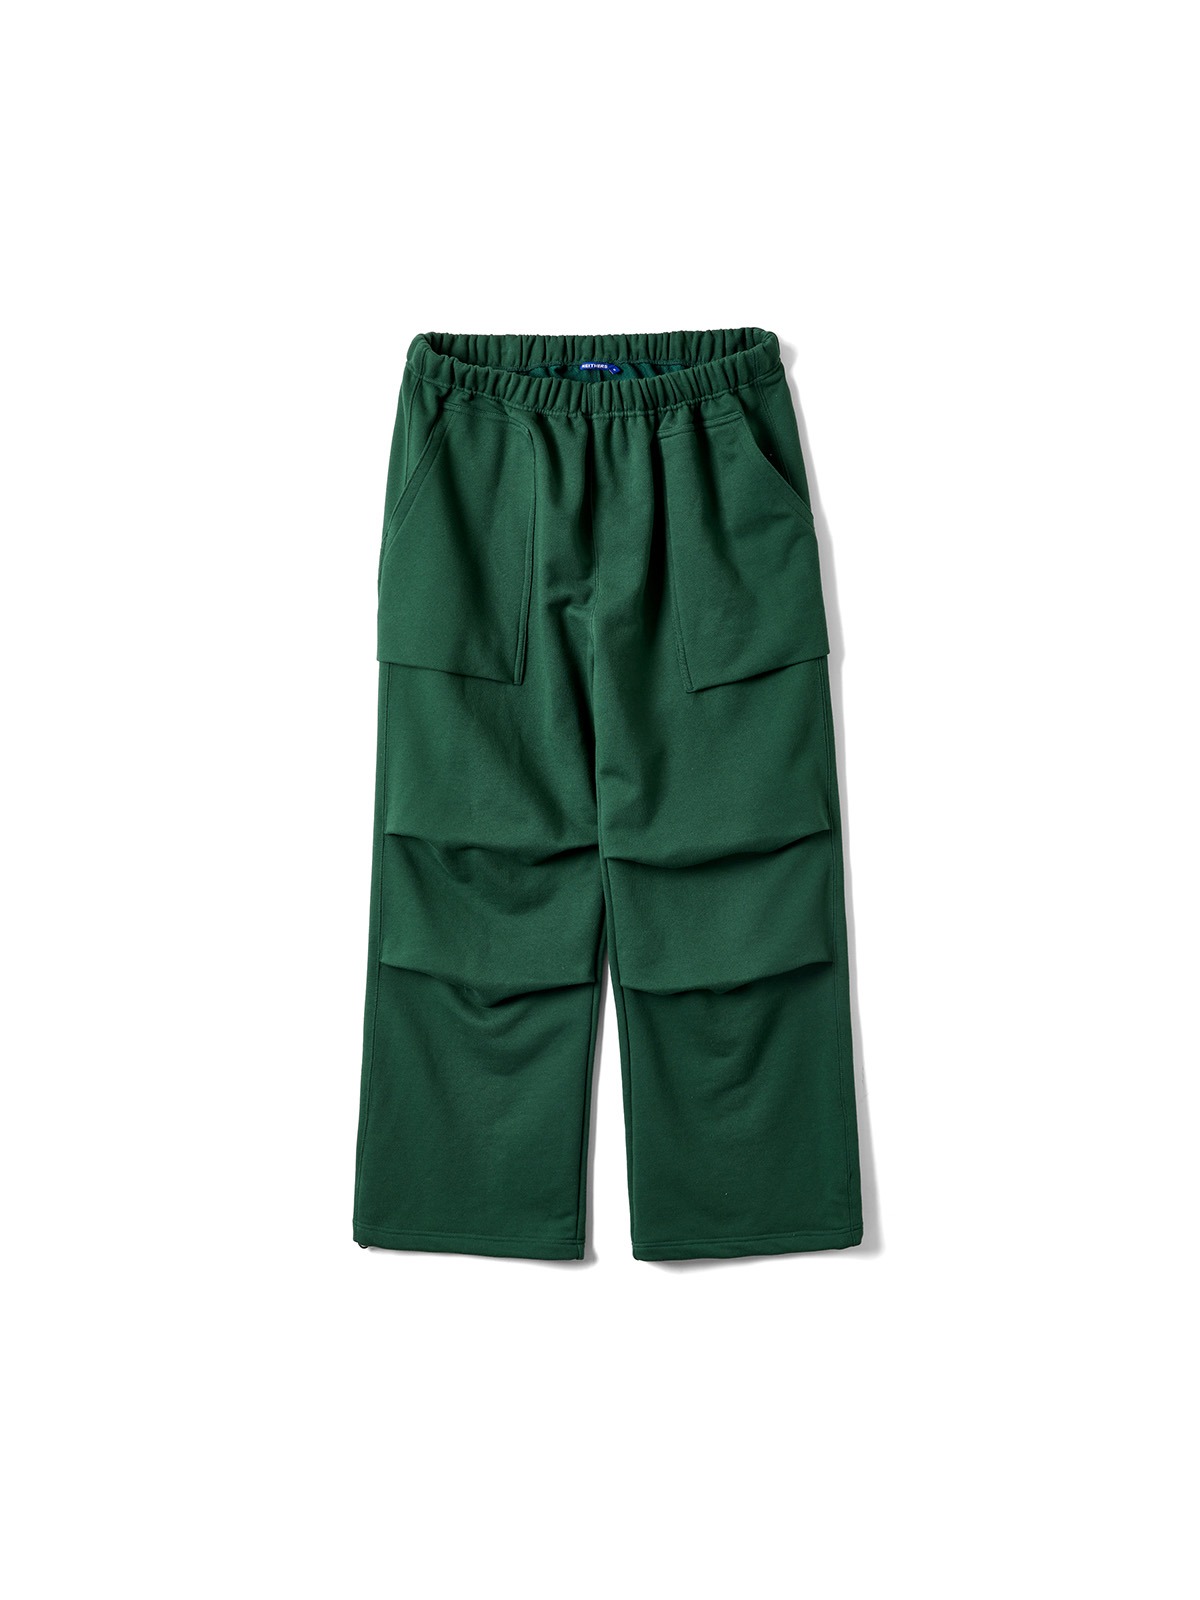 Newsboy Sweatpants (Forest Green)